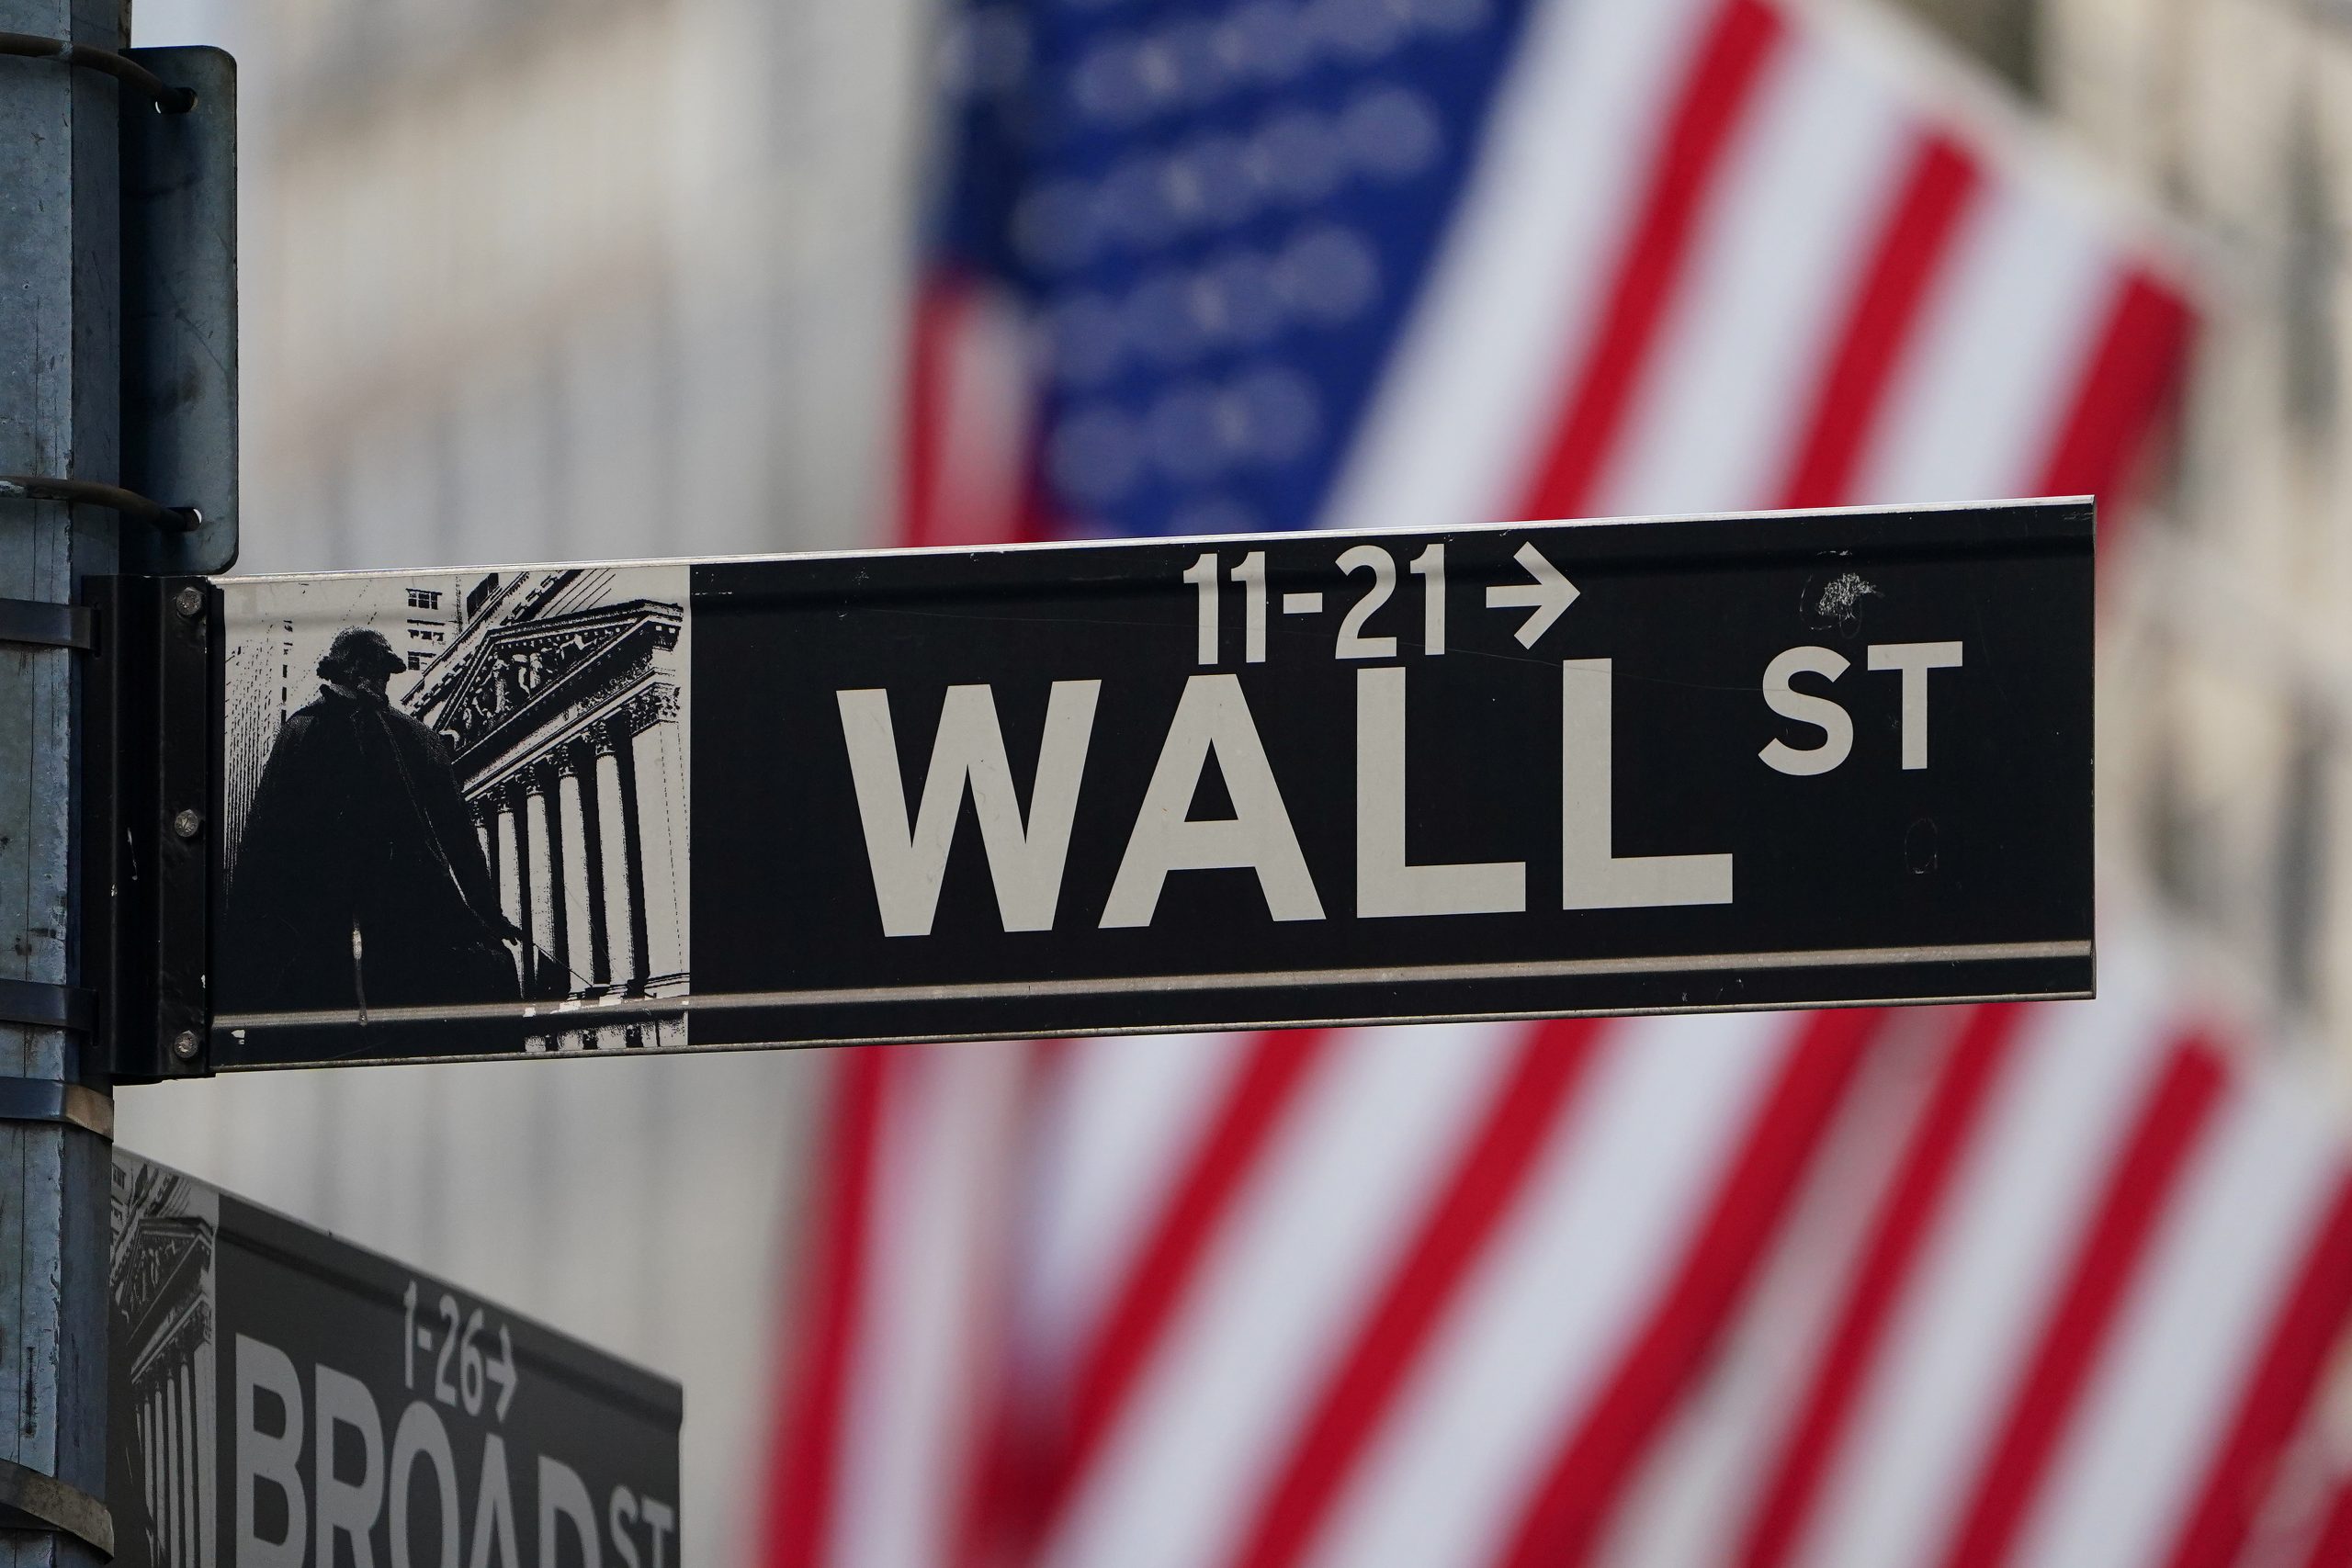 Wall Street beurs beleggen vs